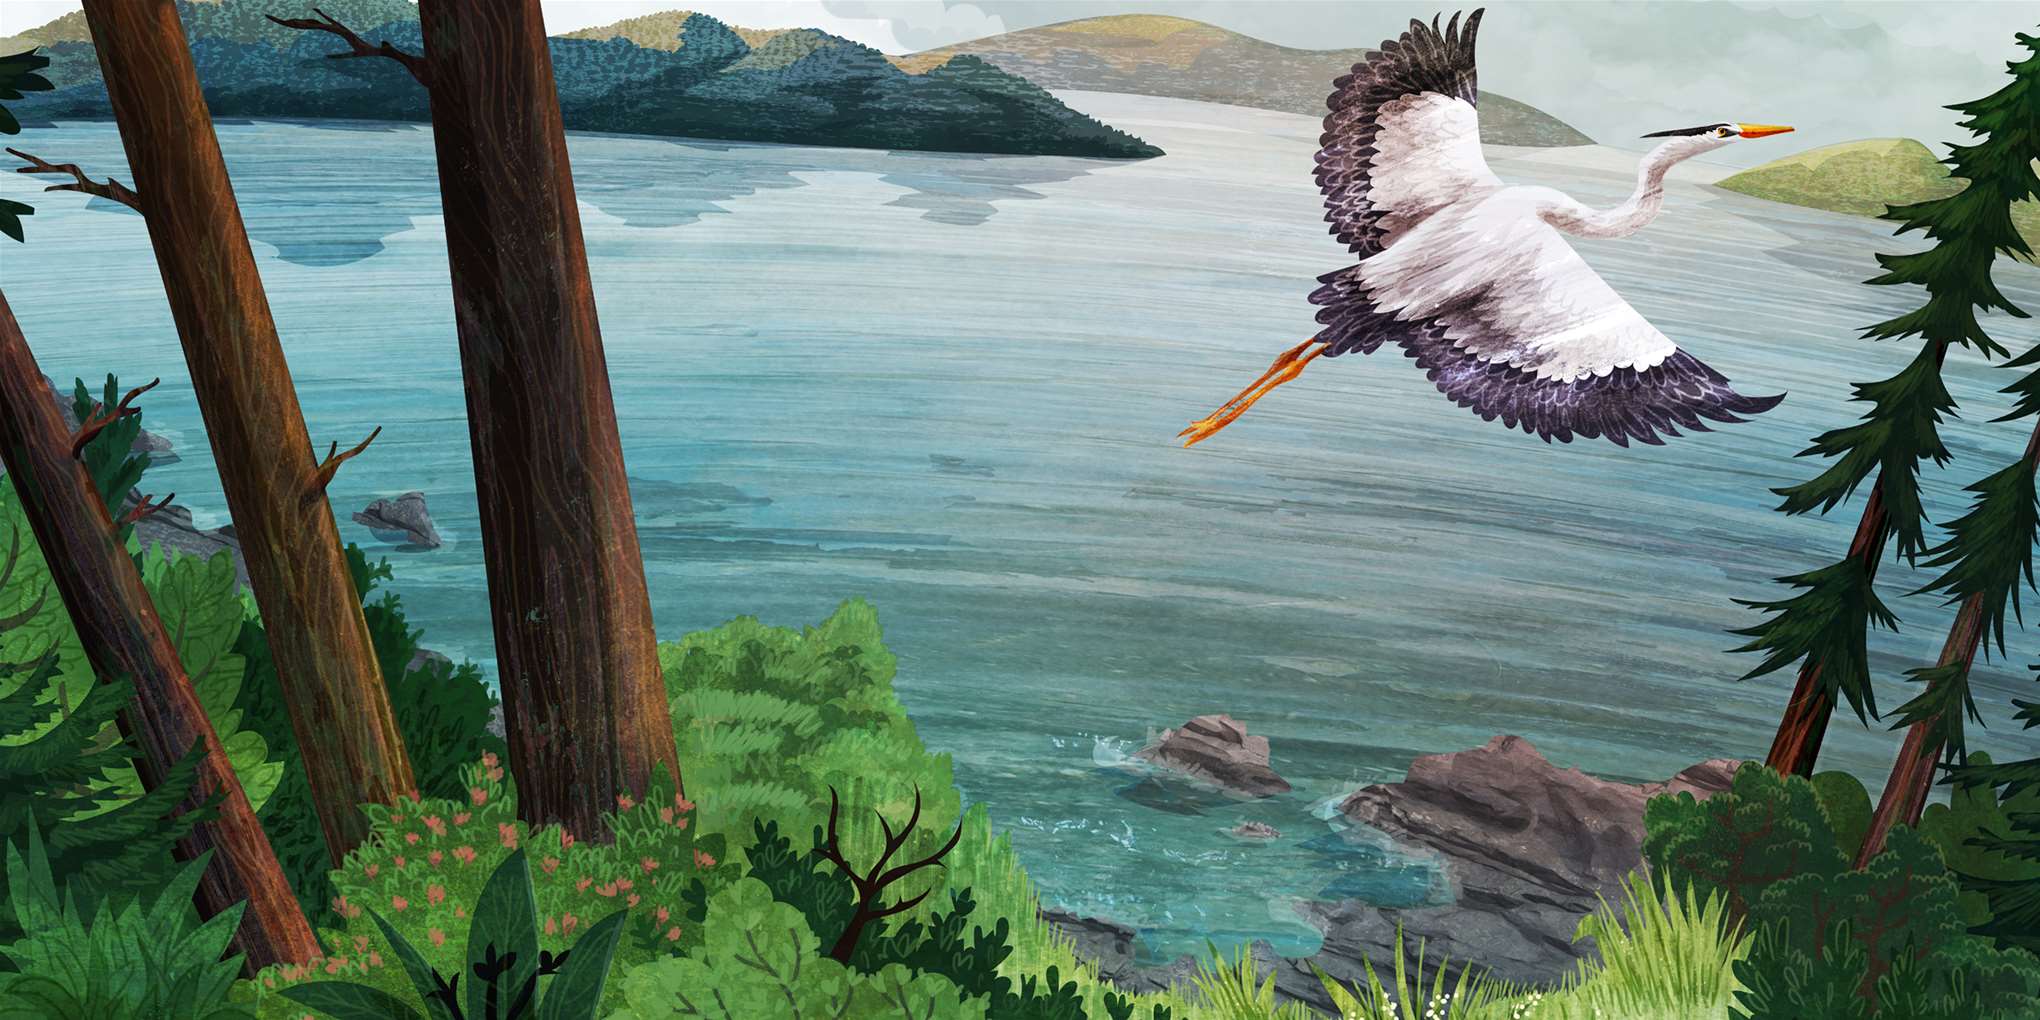 Kerry Hyndman, Nature based digital textural playful landscape scene with flying Heron.